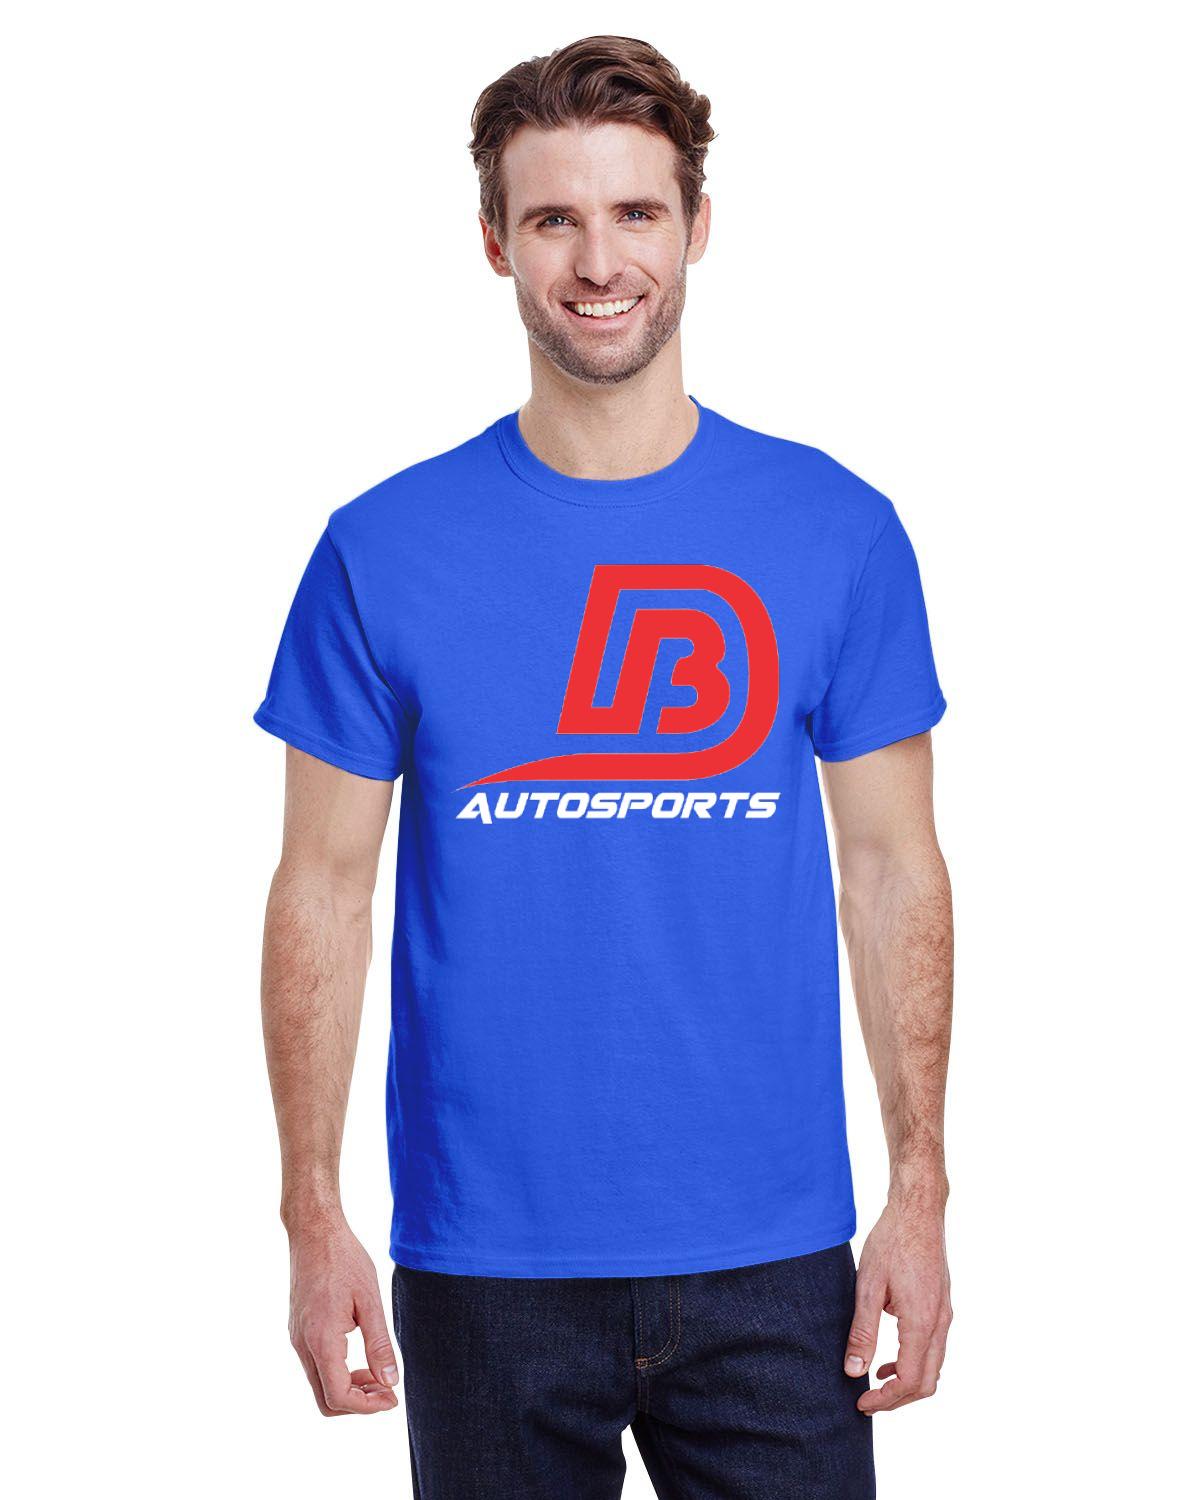 Daniel Bois Autosports Men's Tshirt